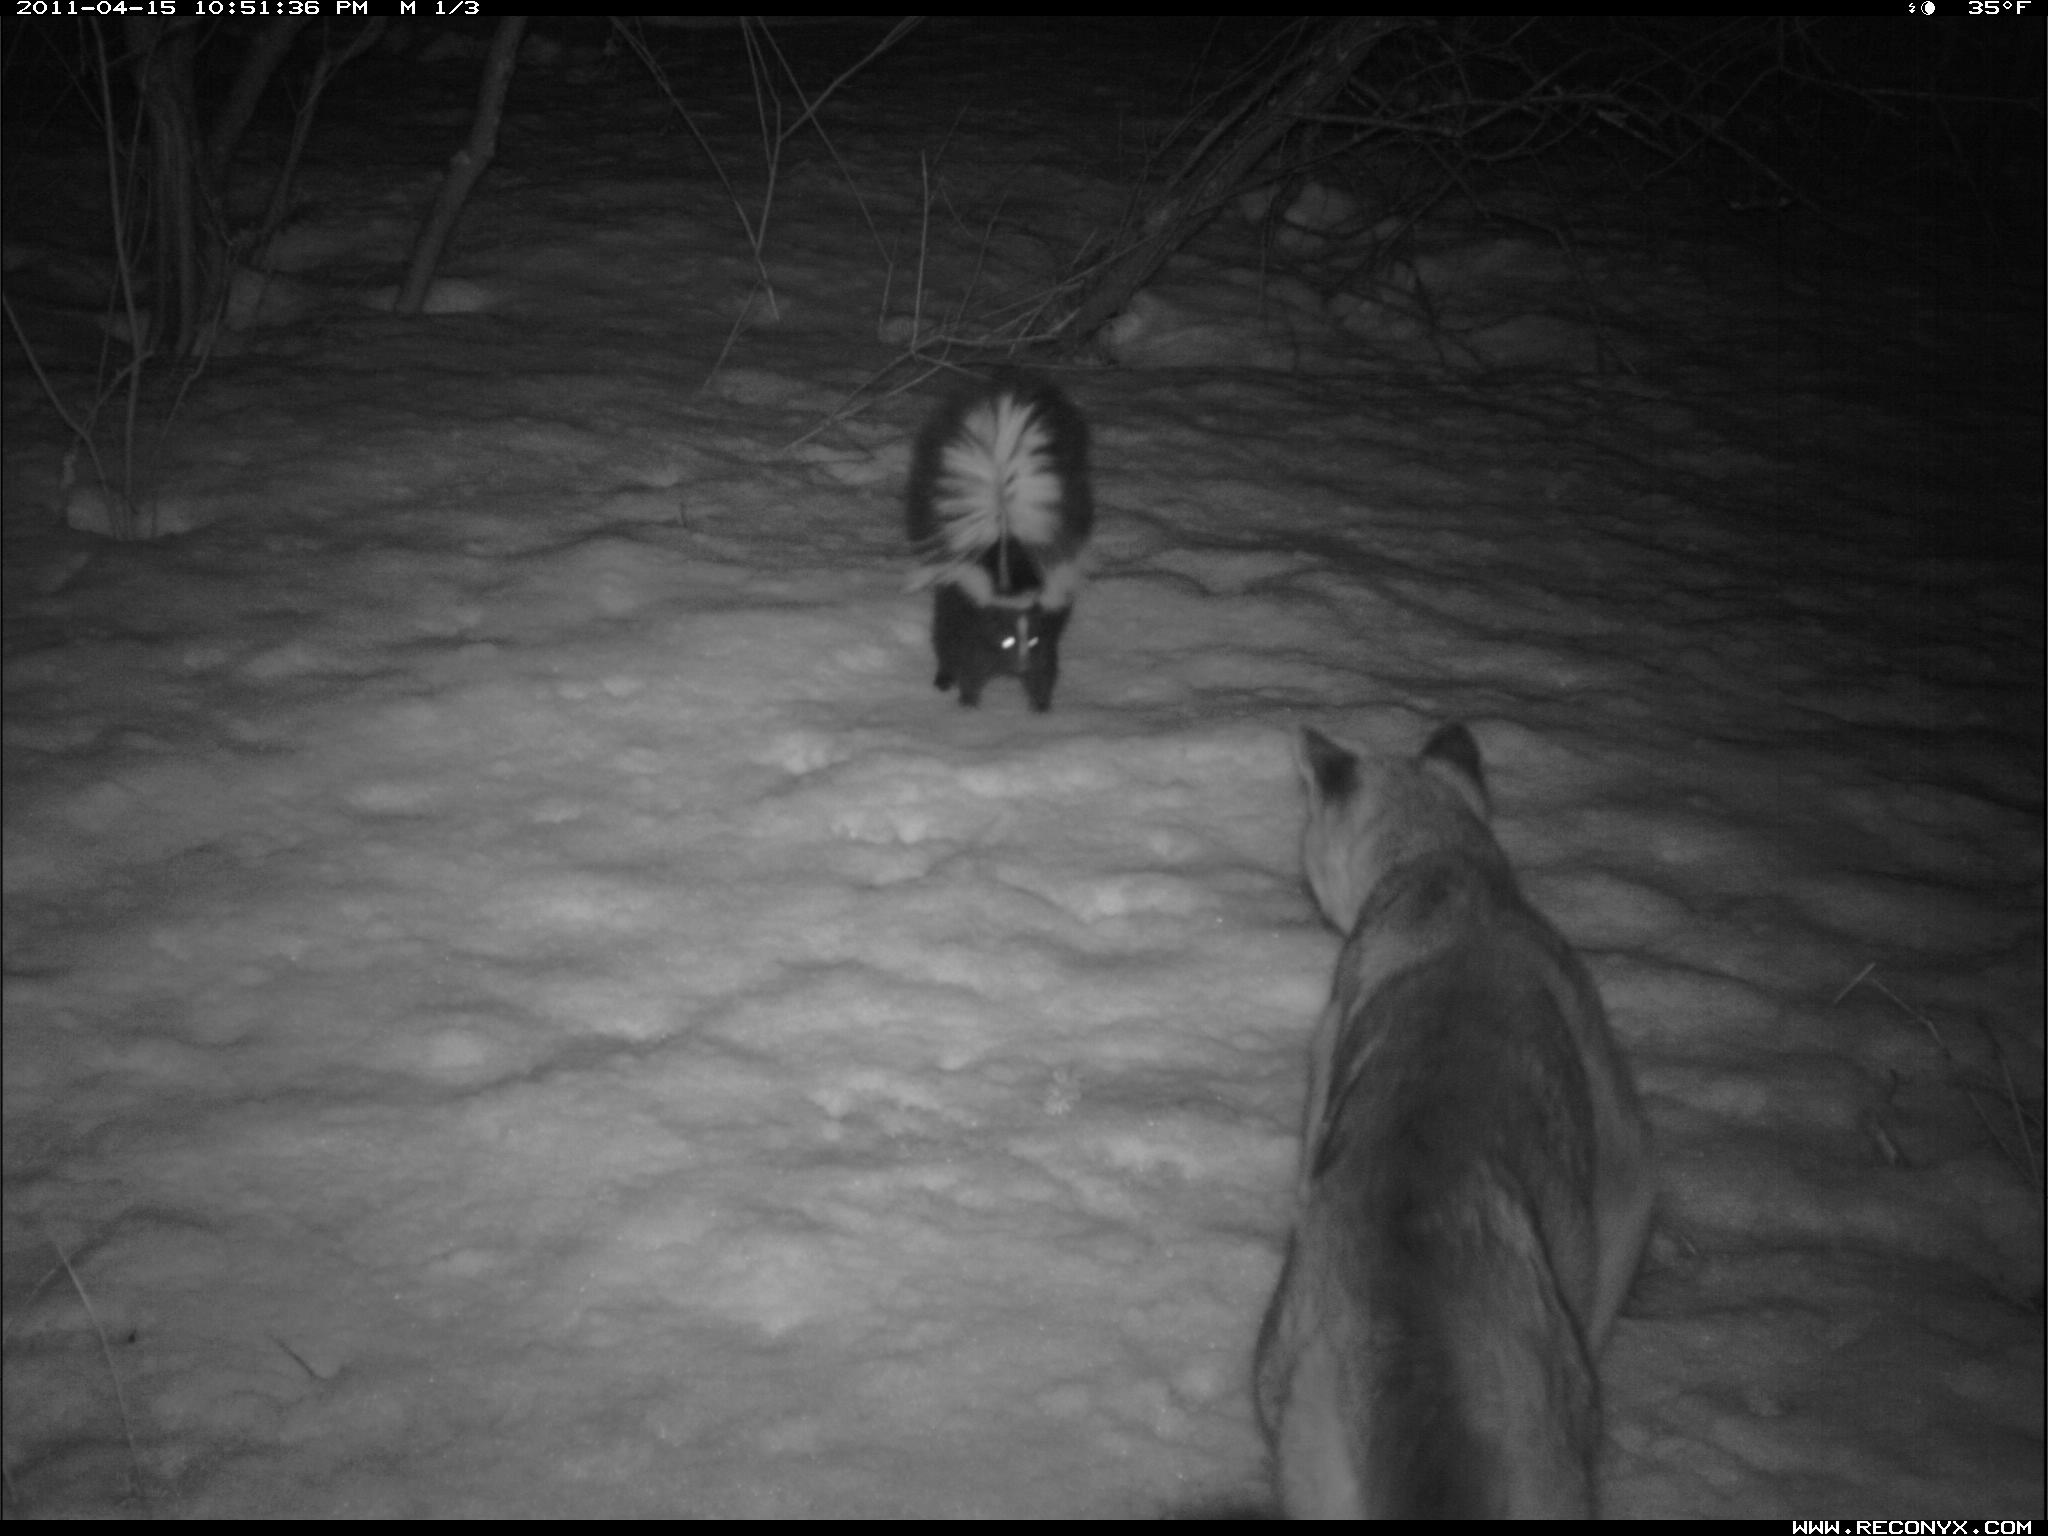 Skunk Scares Off Cougar in Camera Trap Photo | Live Science